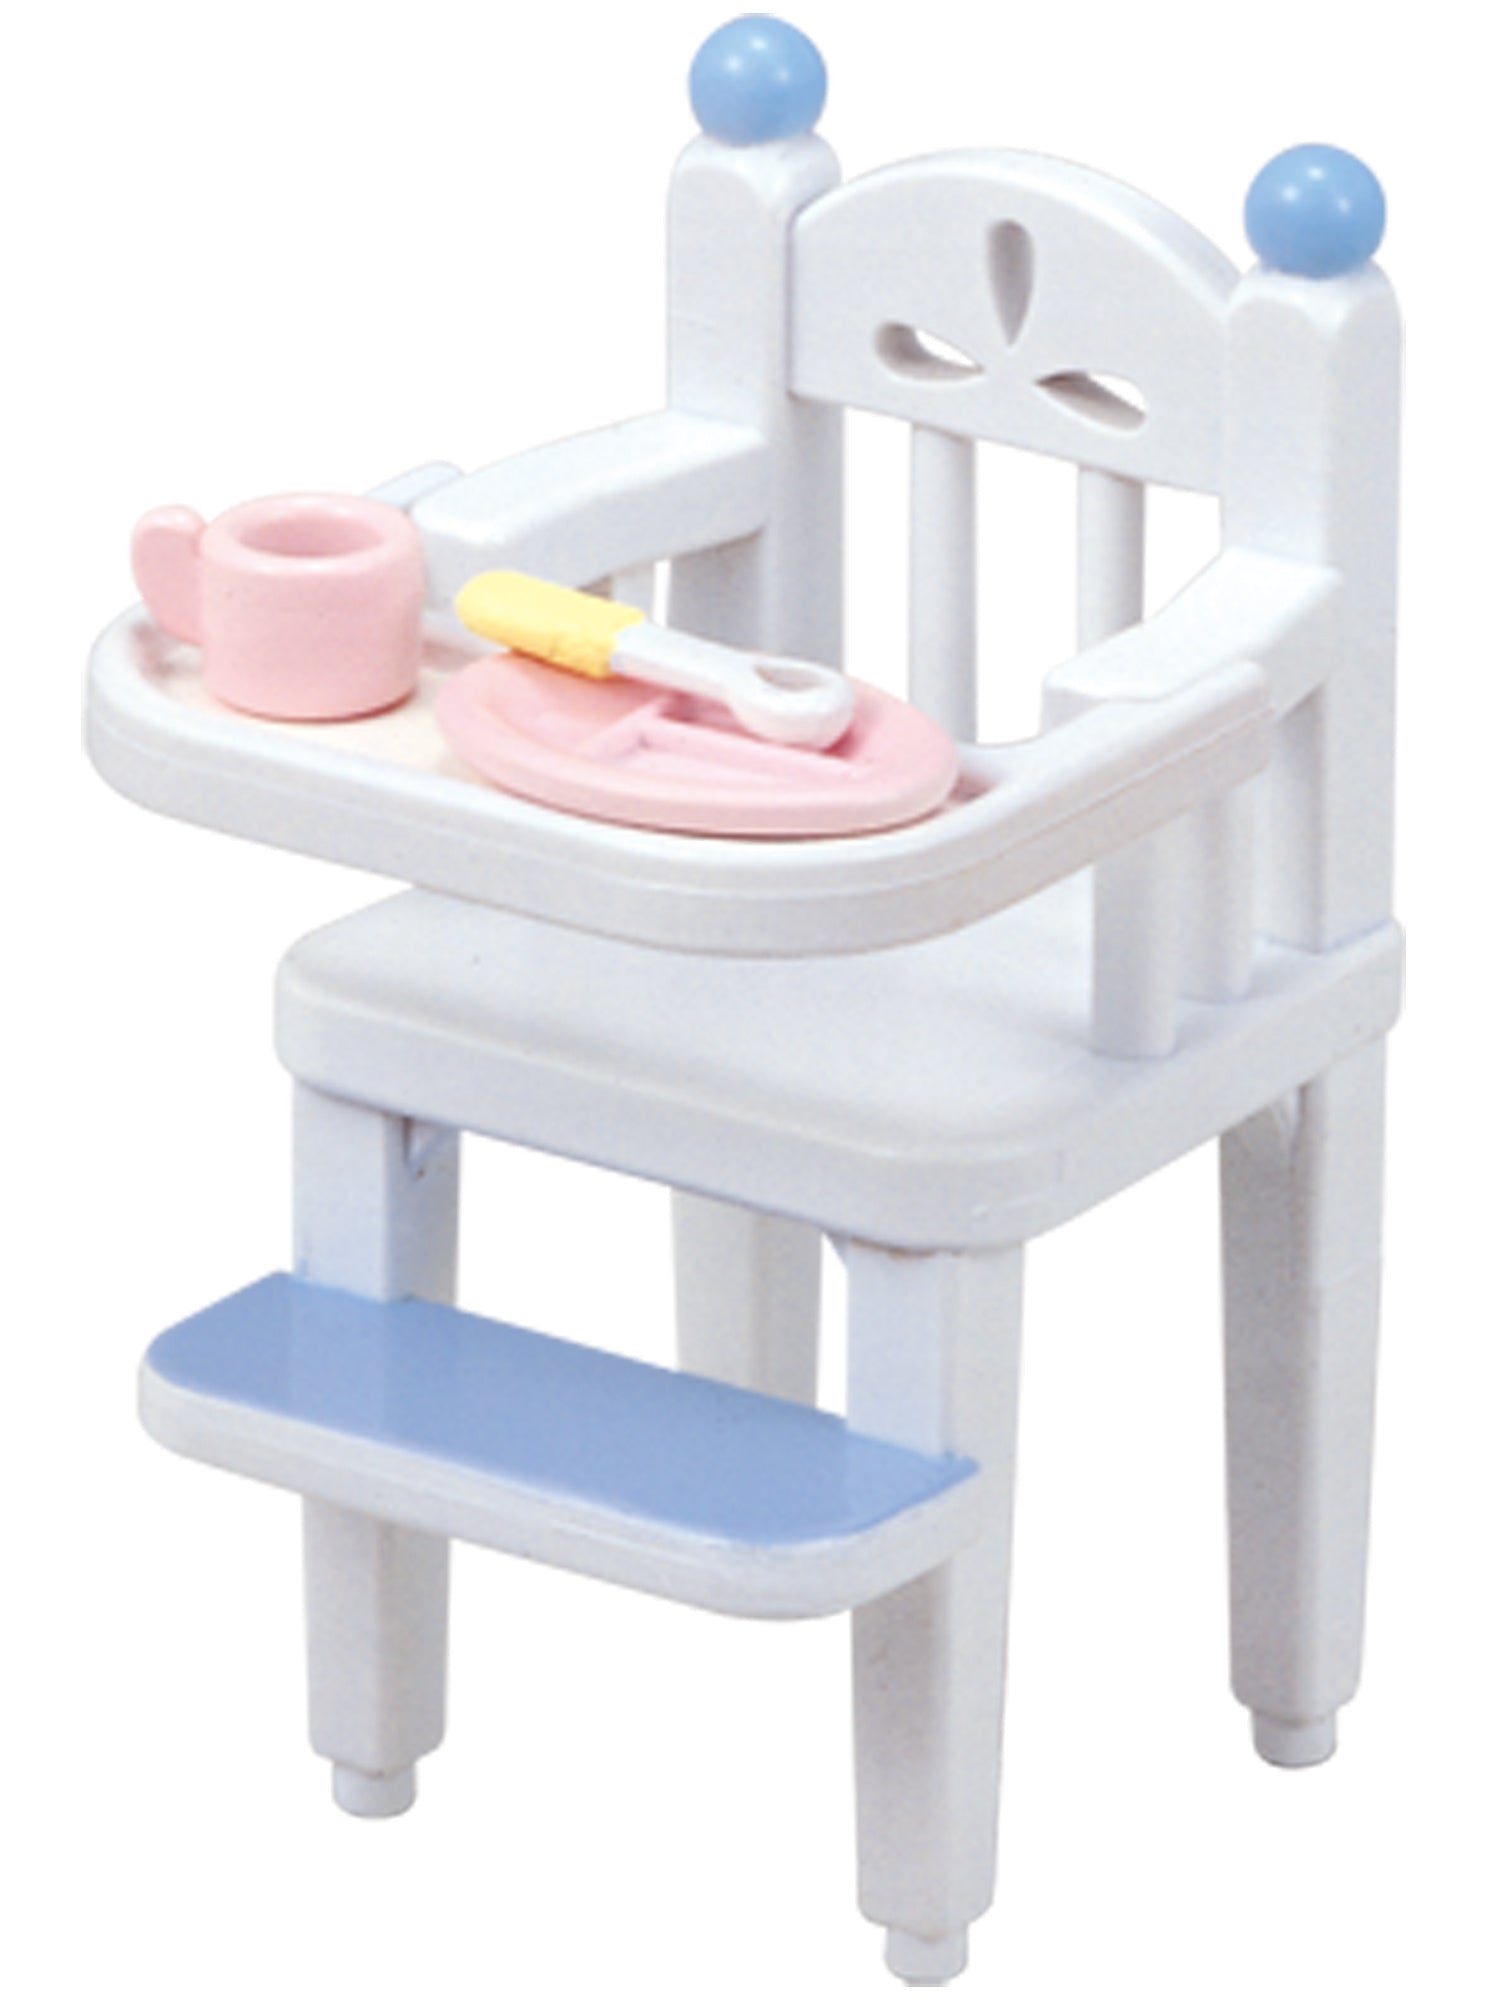 5221-Sylvanian Families Baby High Chair